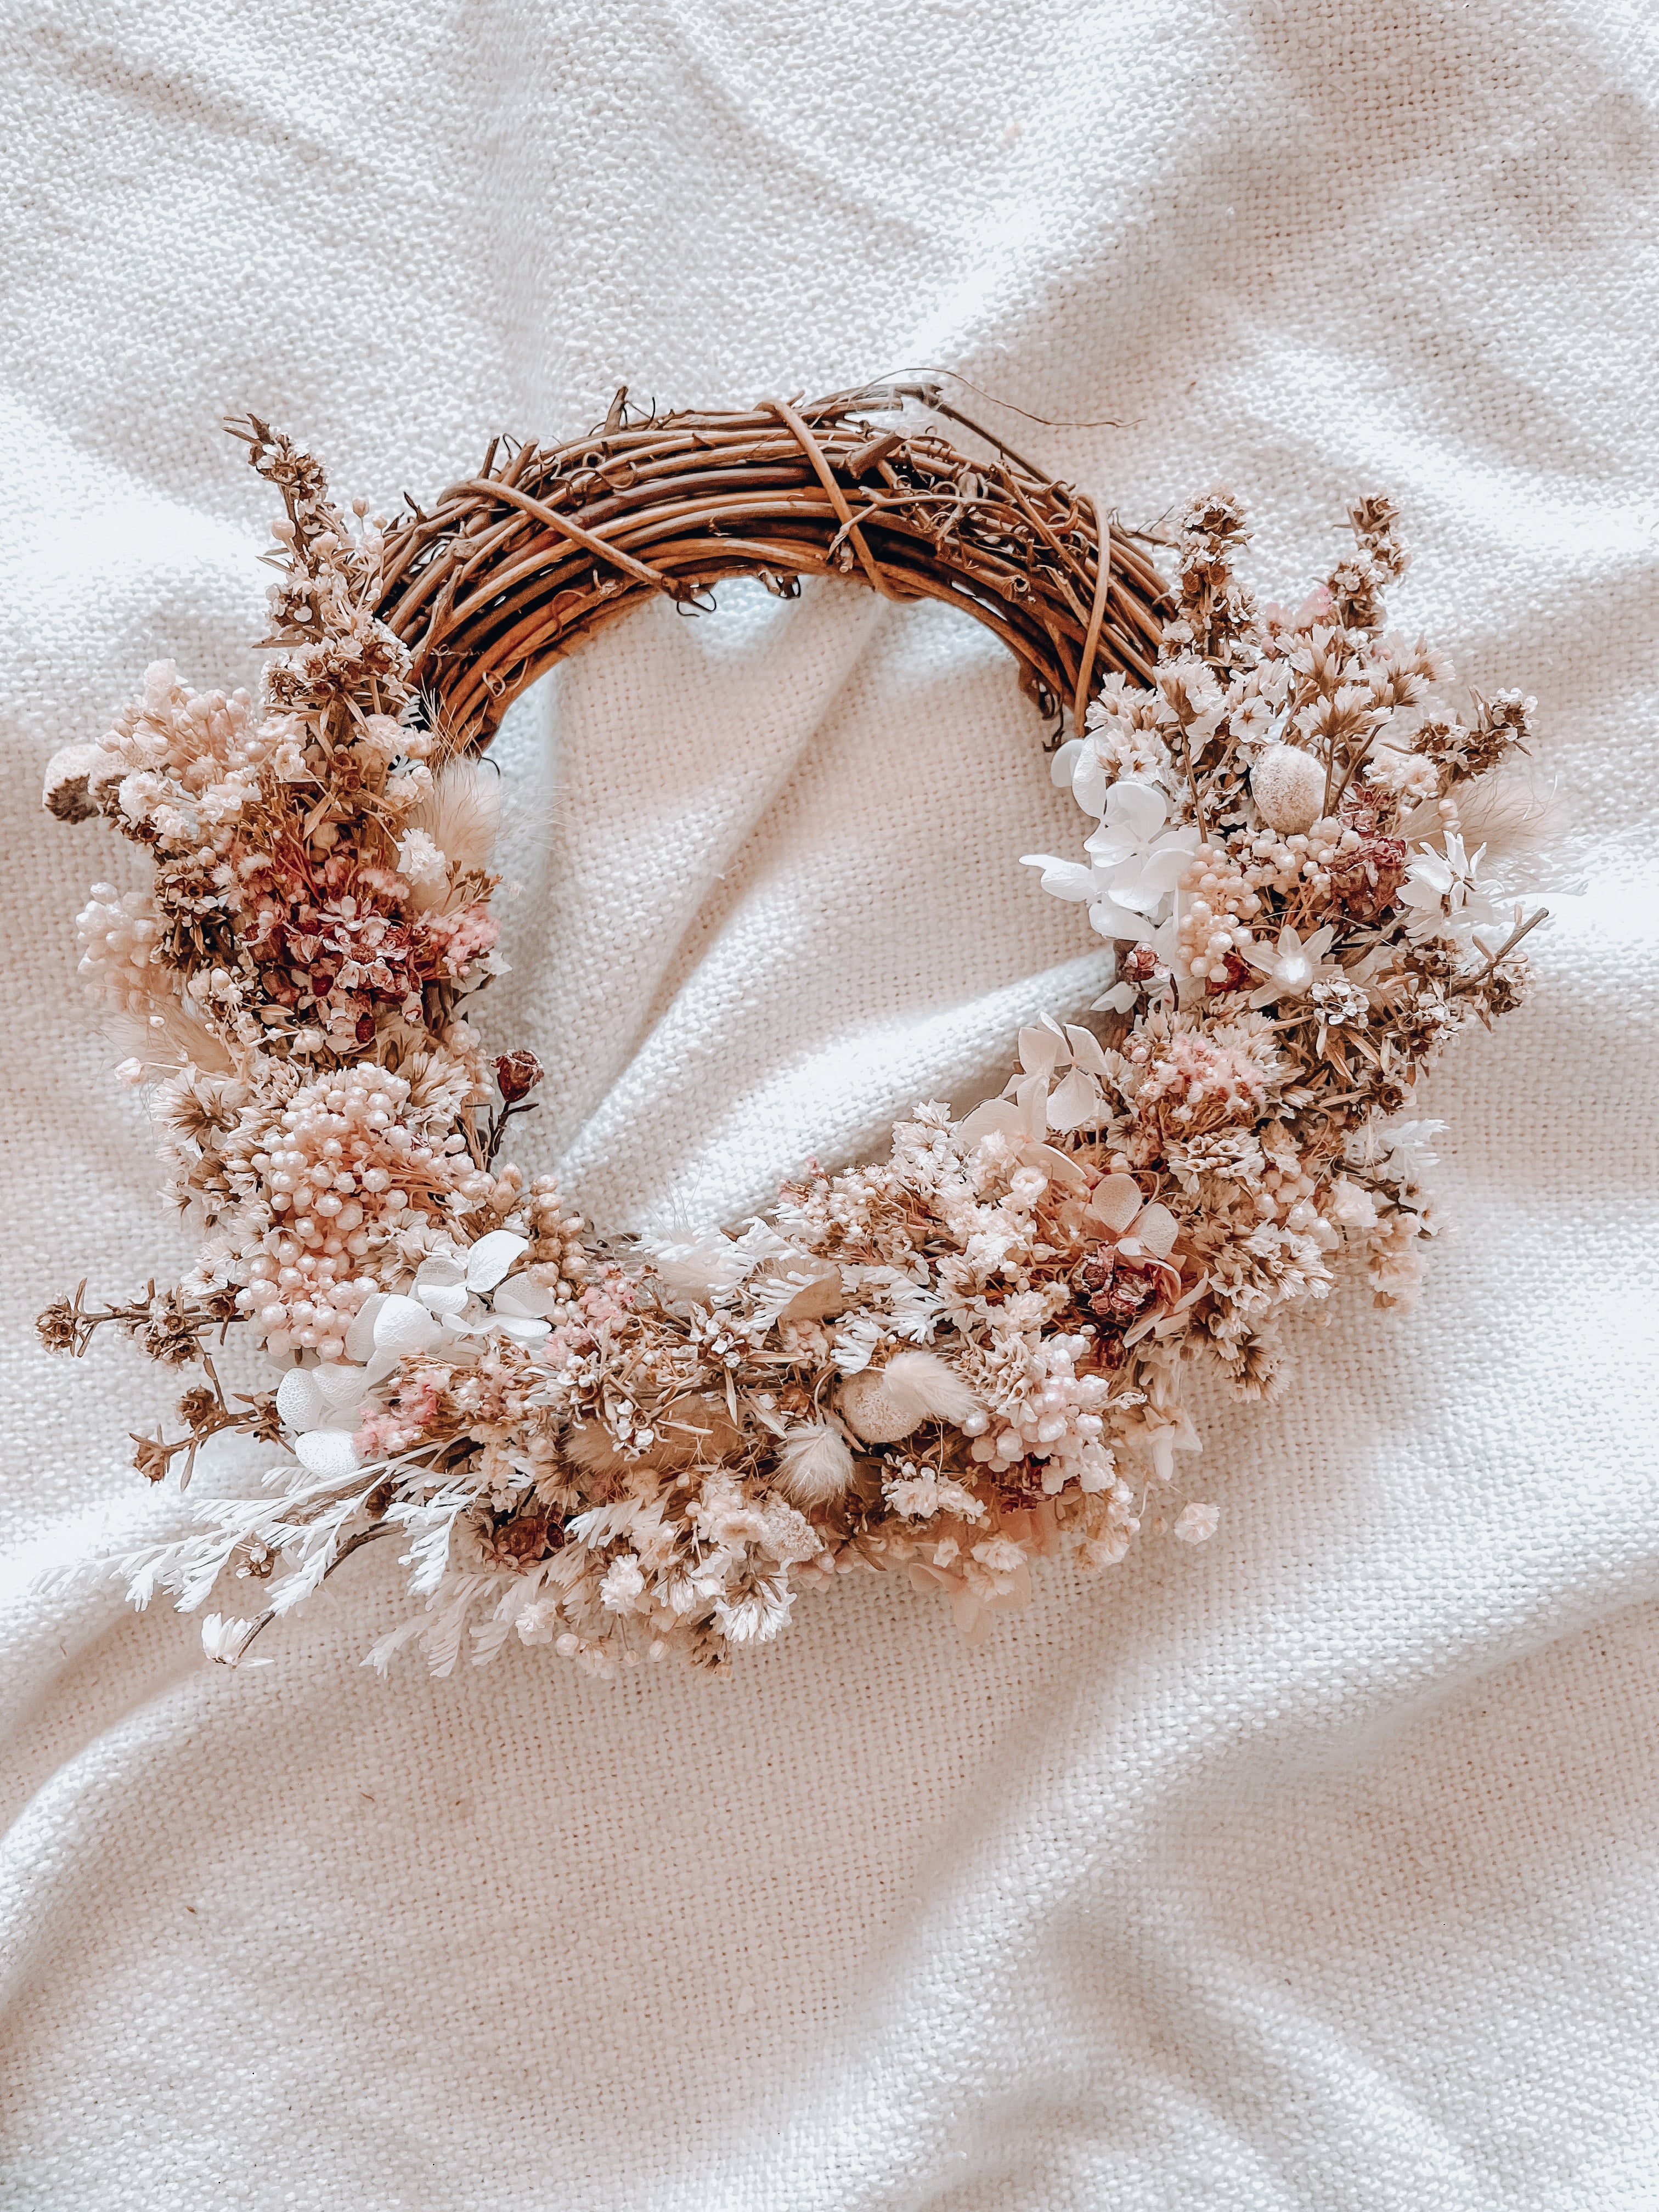 Mini everlasting floral wreaths - white/natural/blush pink.